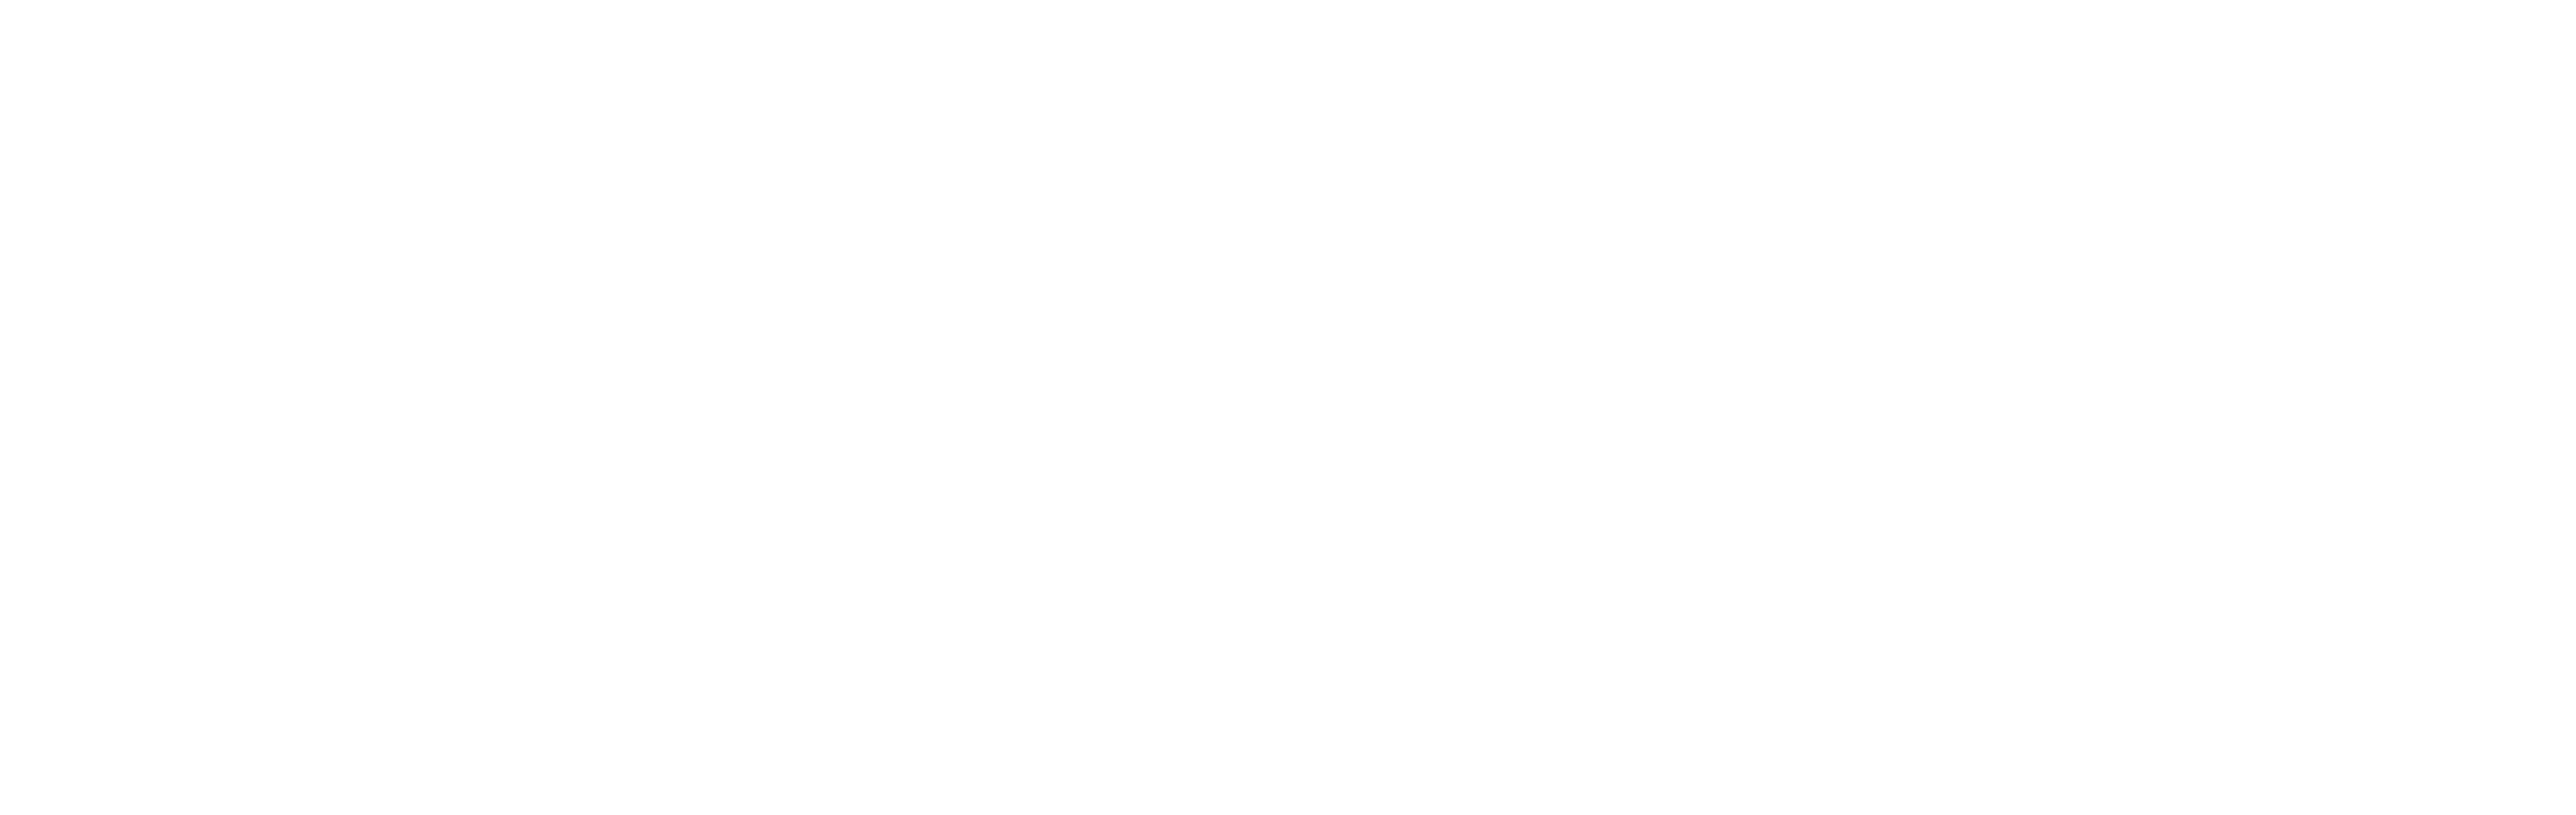 Intraway-logo_white